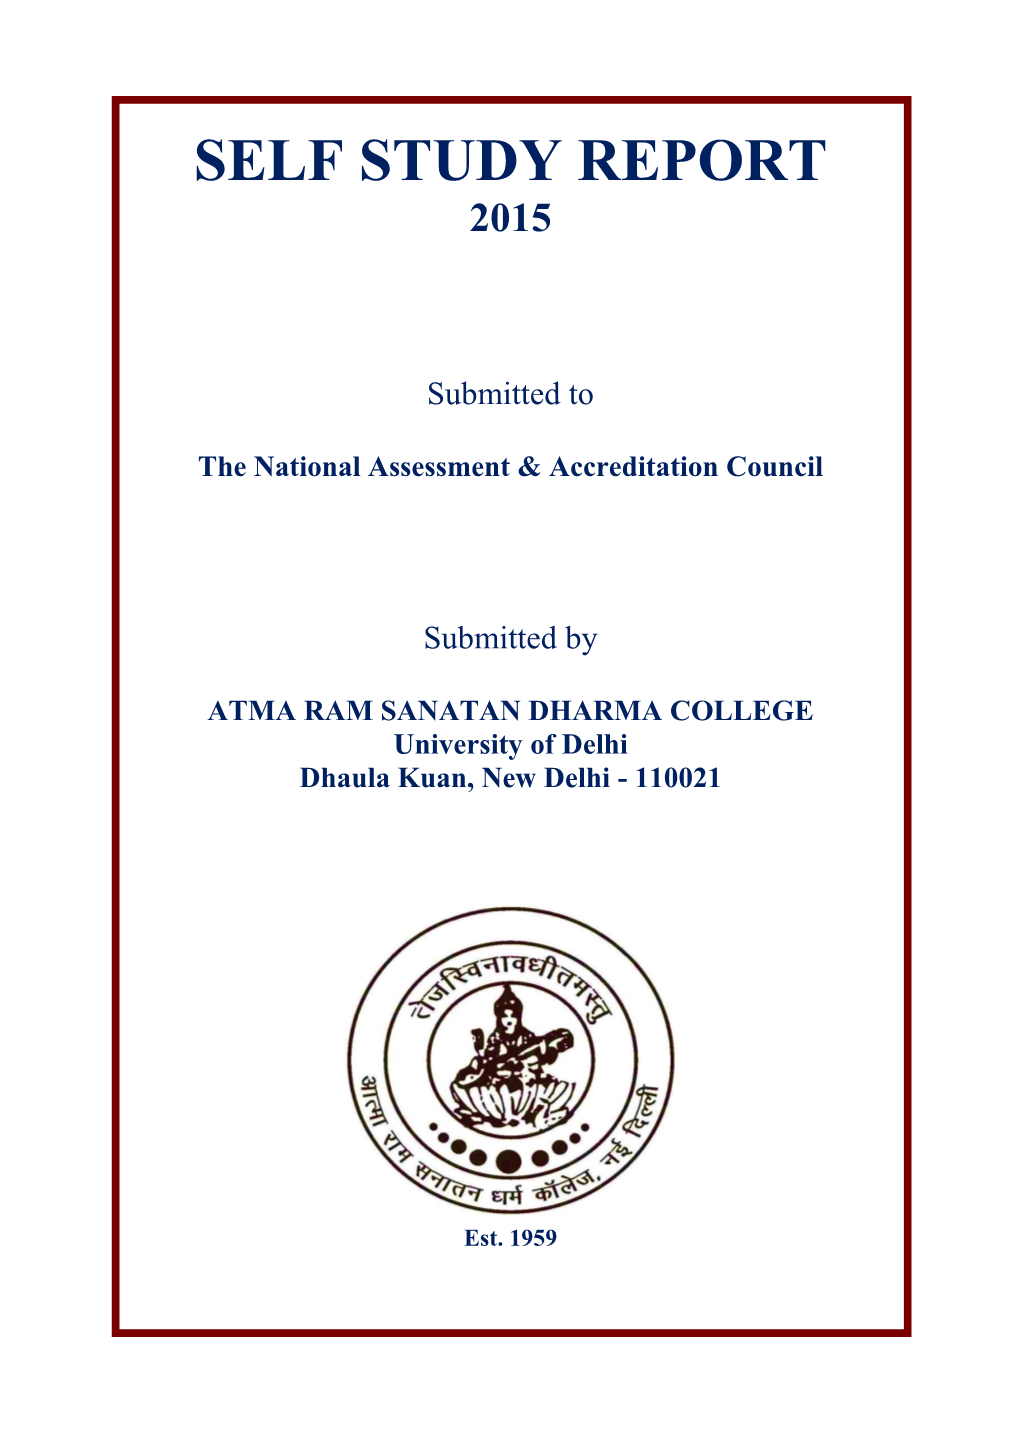 Atma Ram Sanatan Dharma College, University of Delhi